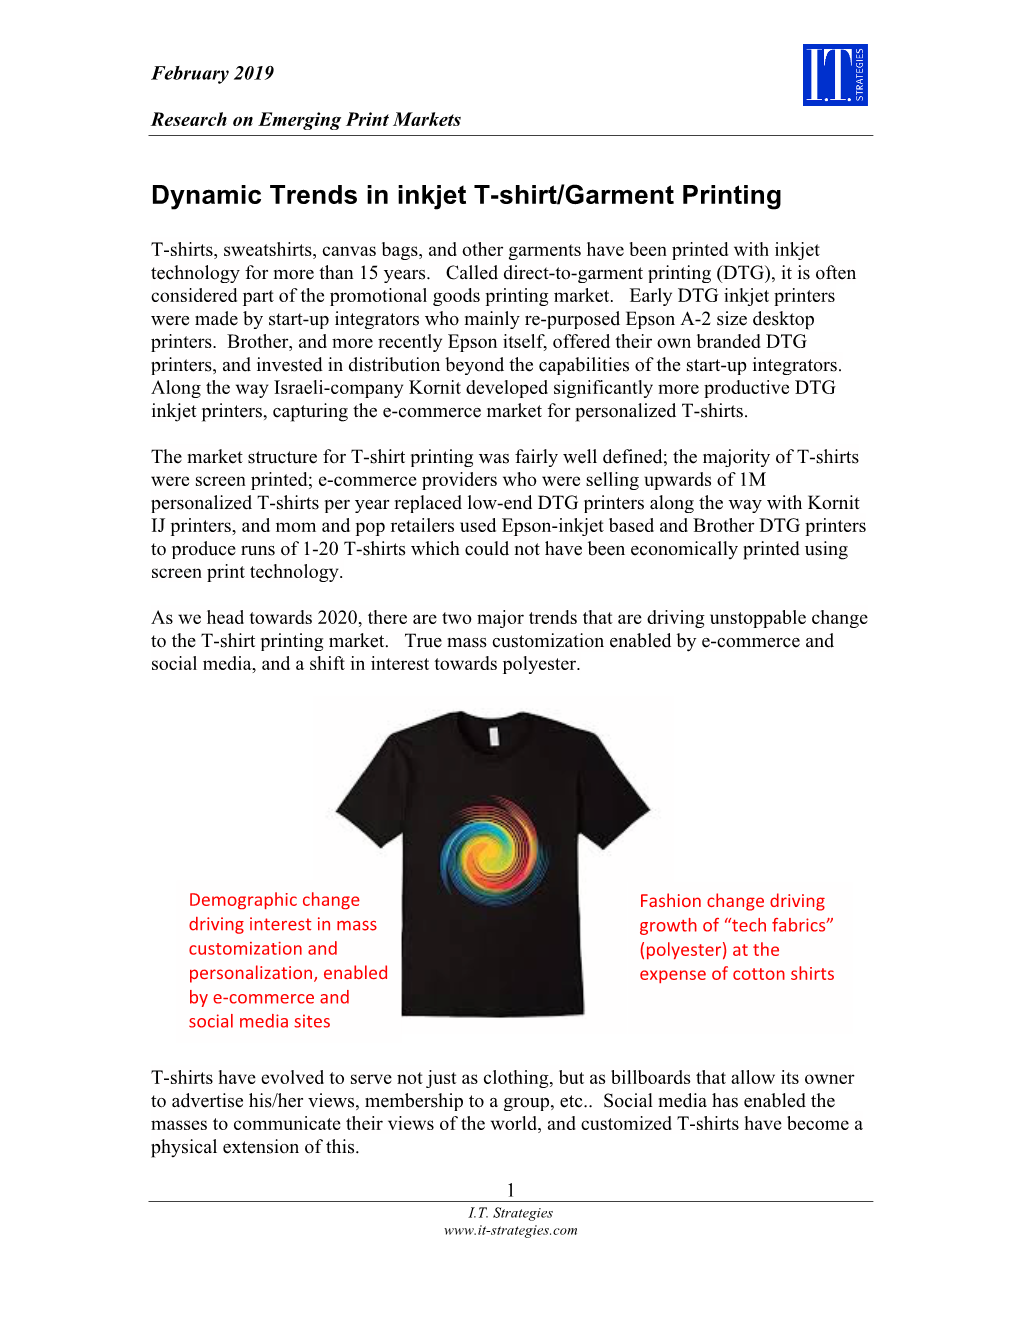 Dynamic Trends in Inkjet T-Shirt/Garment Printing